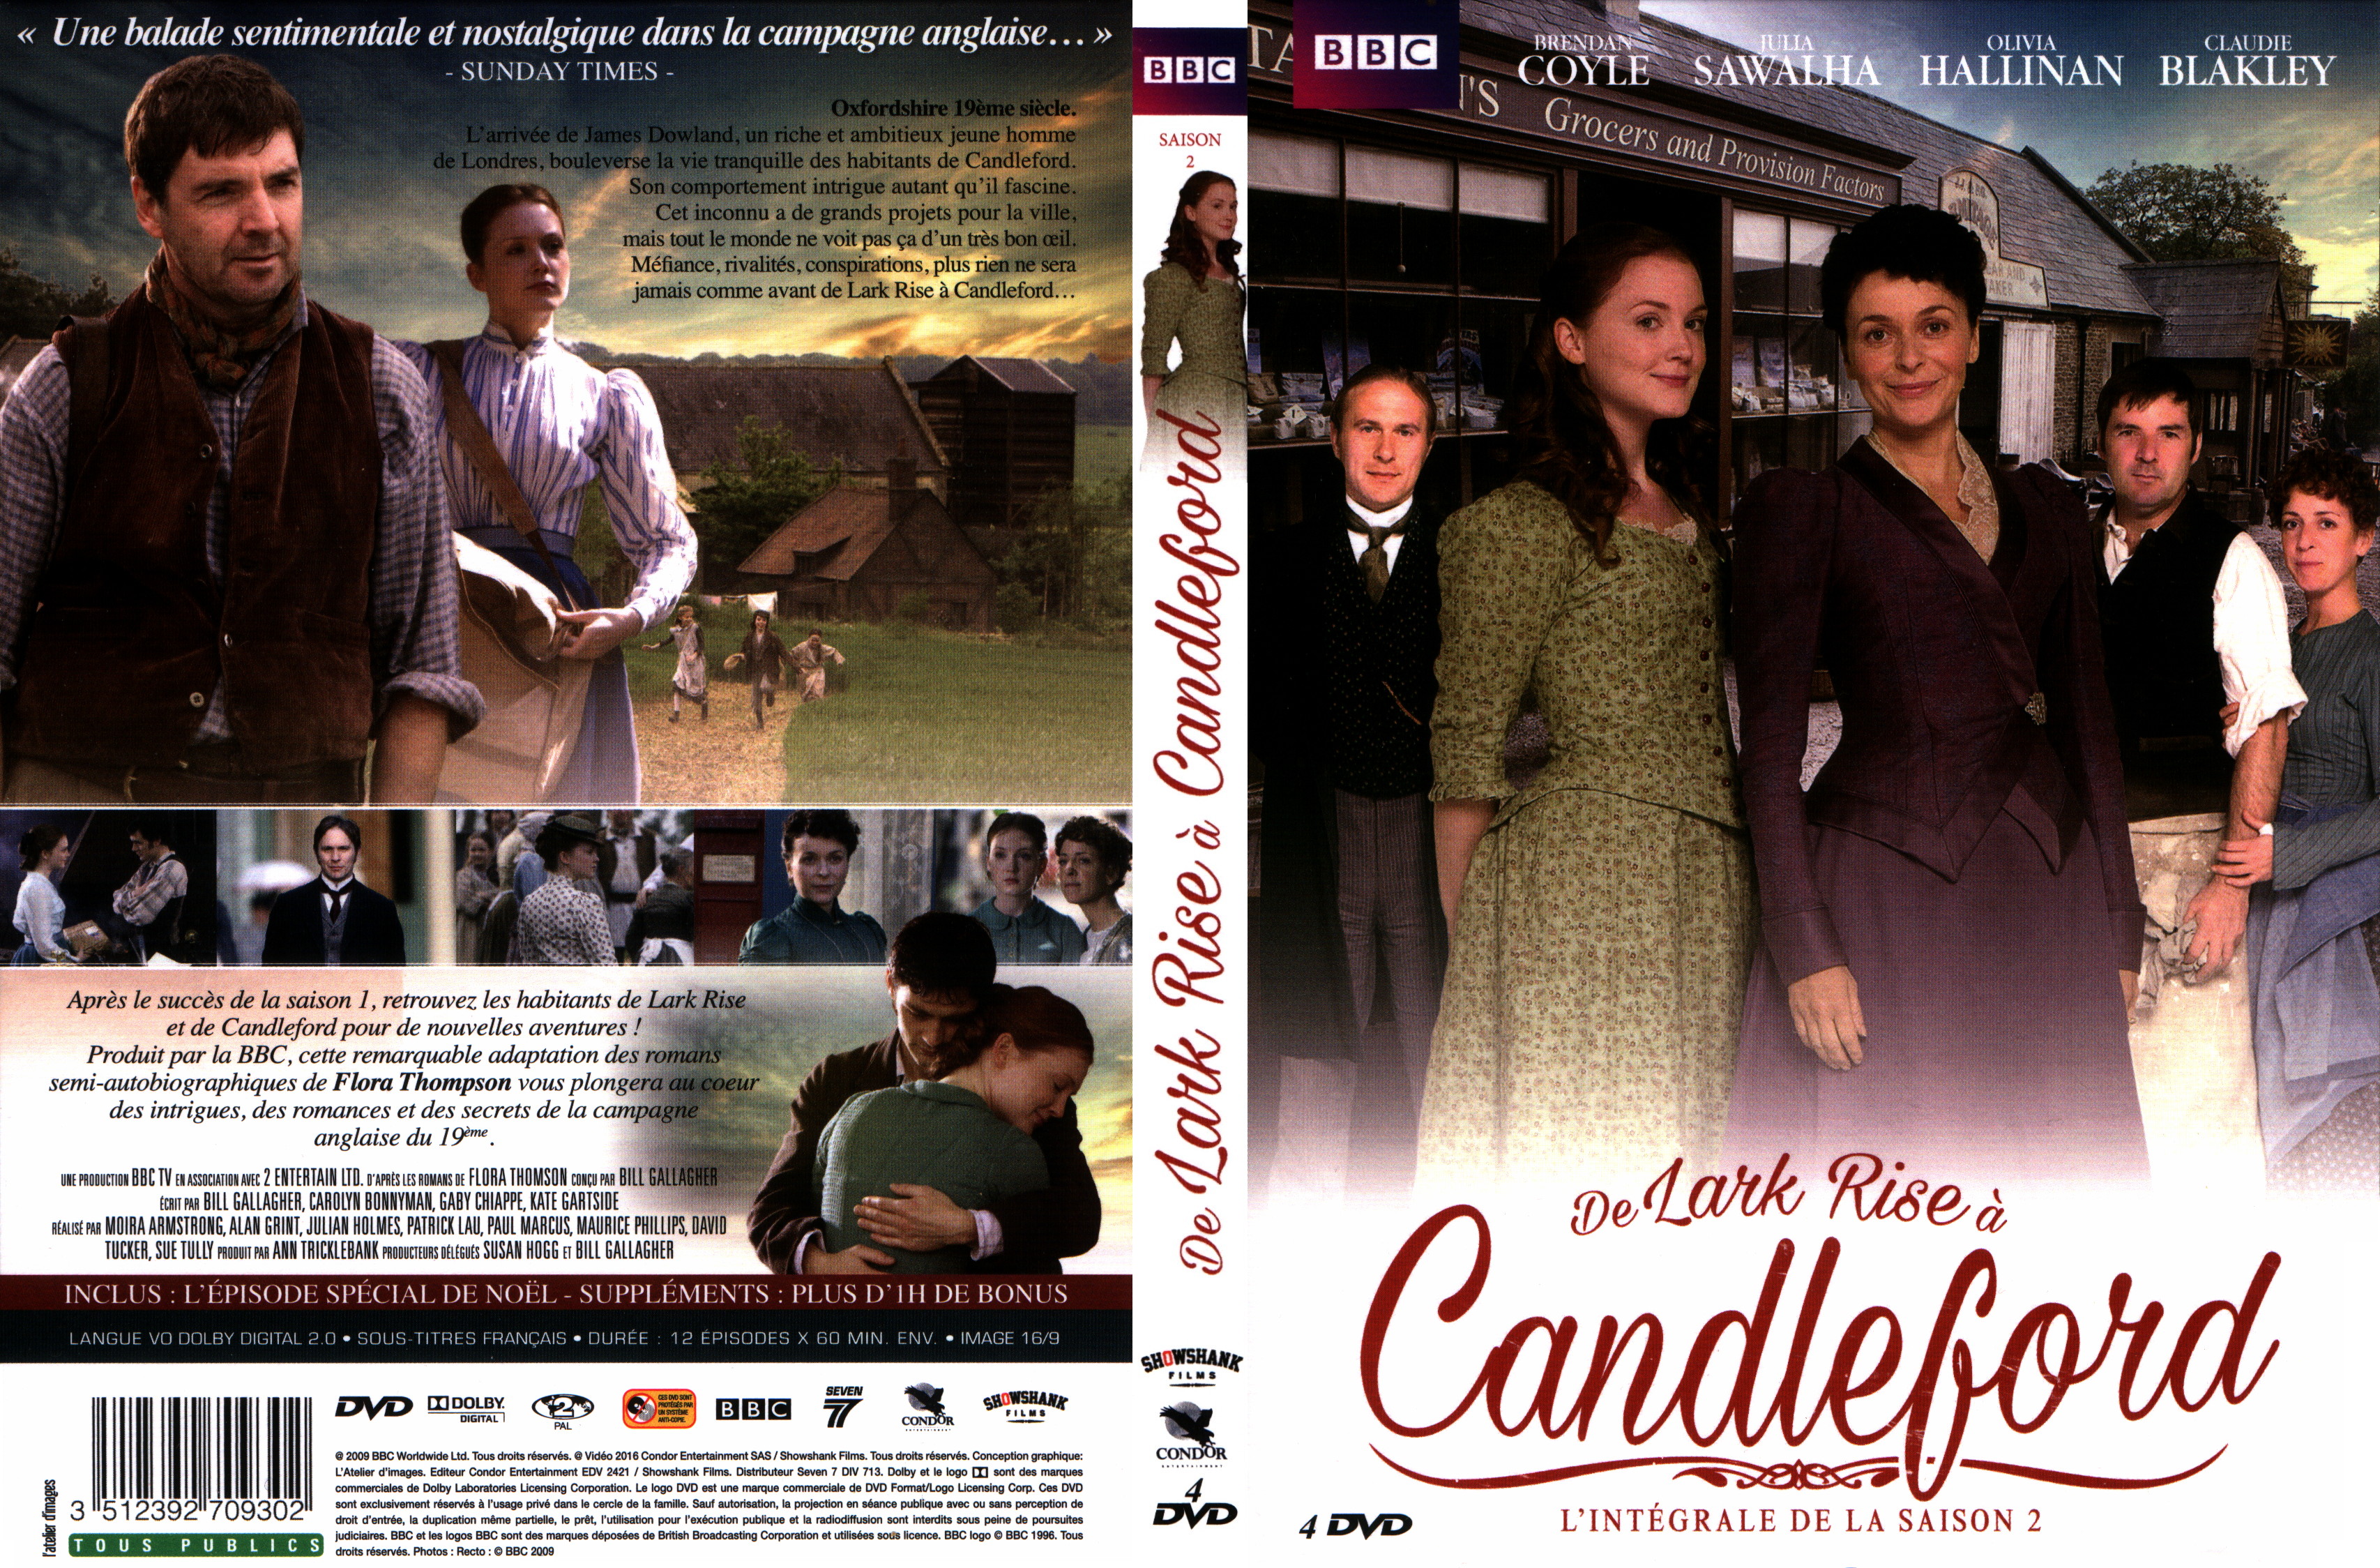 Jaquette DVD Candleford Saison 2